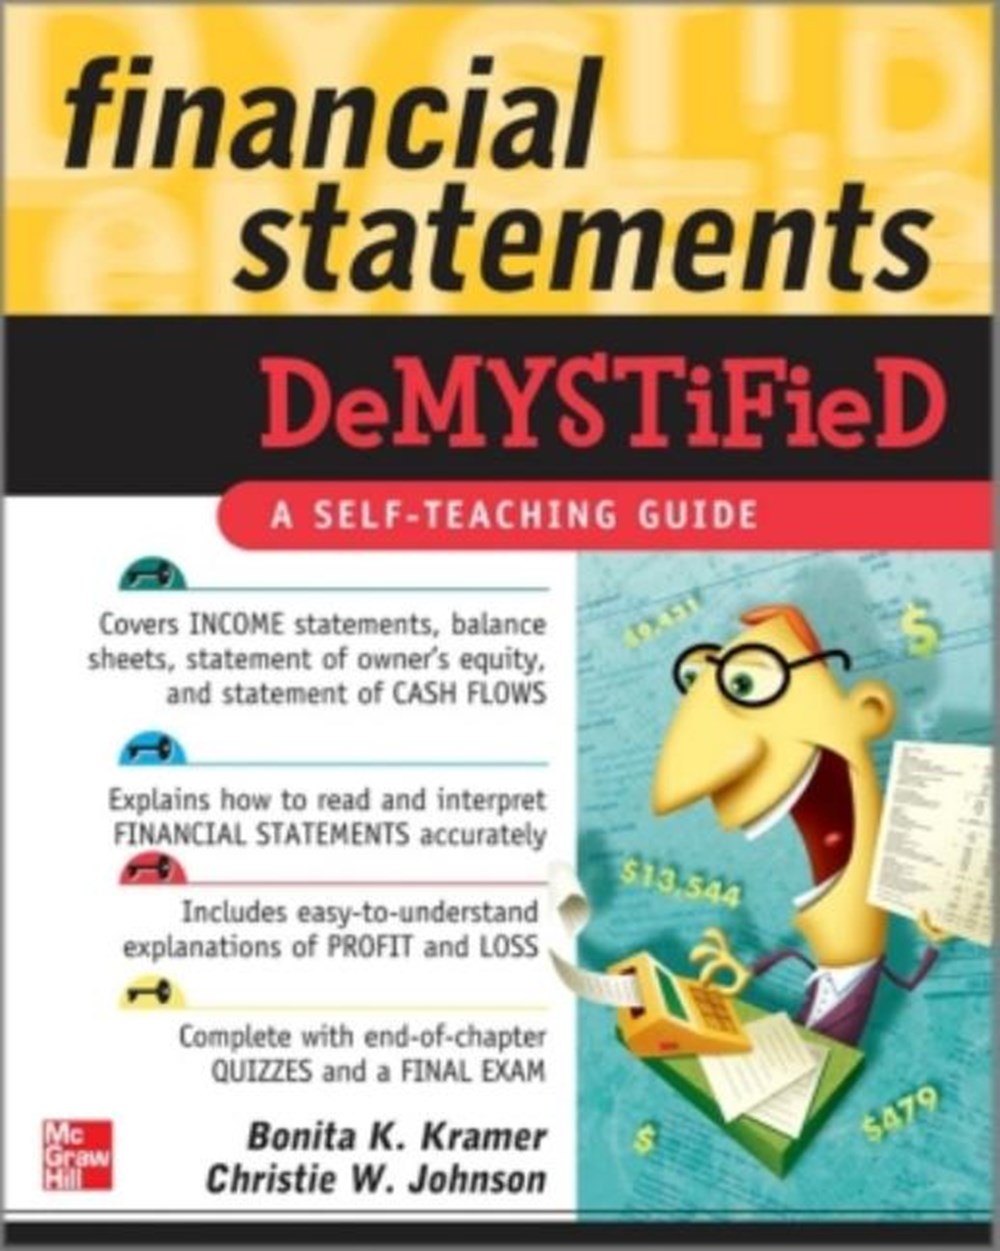 Financial Statements Demystified: A Self-Teaching Guide: A Self-Teaching Guide